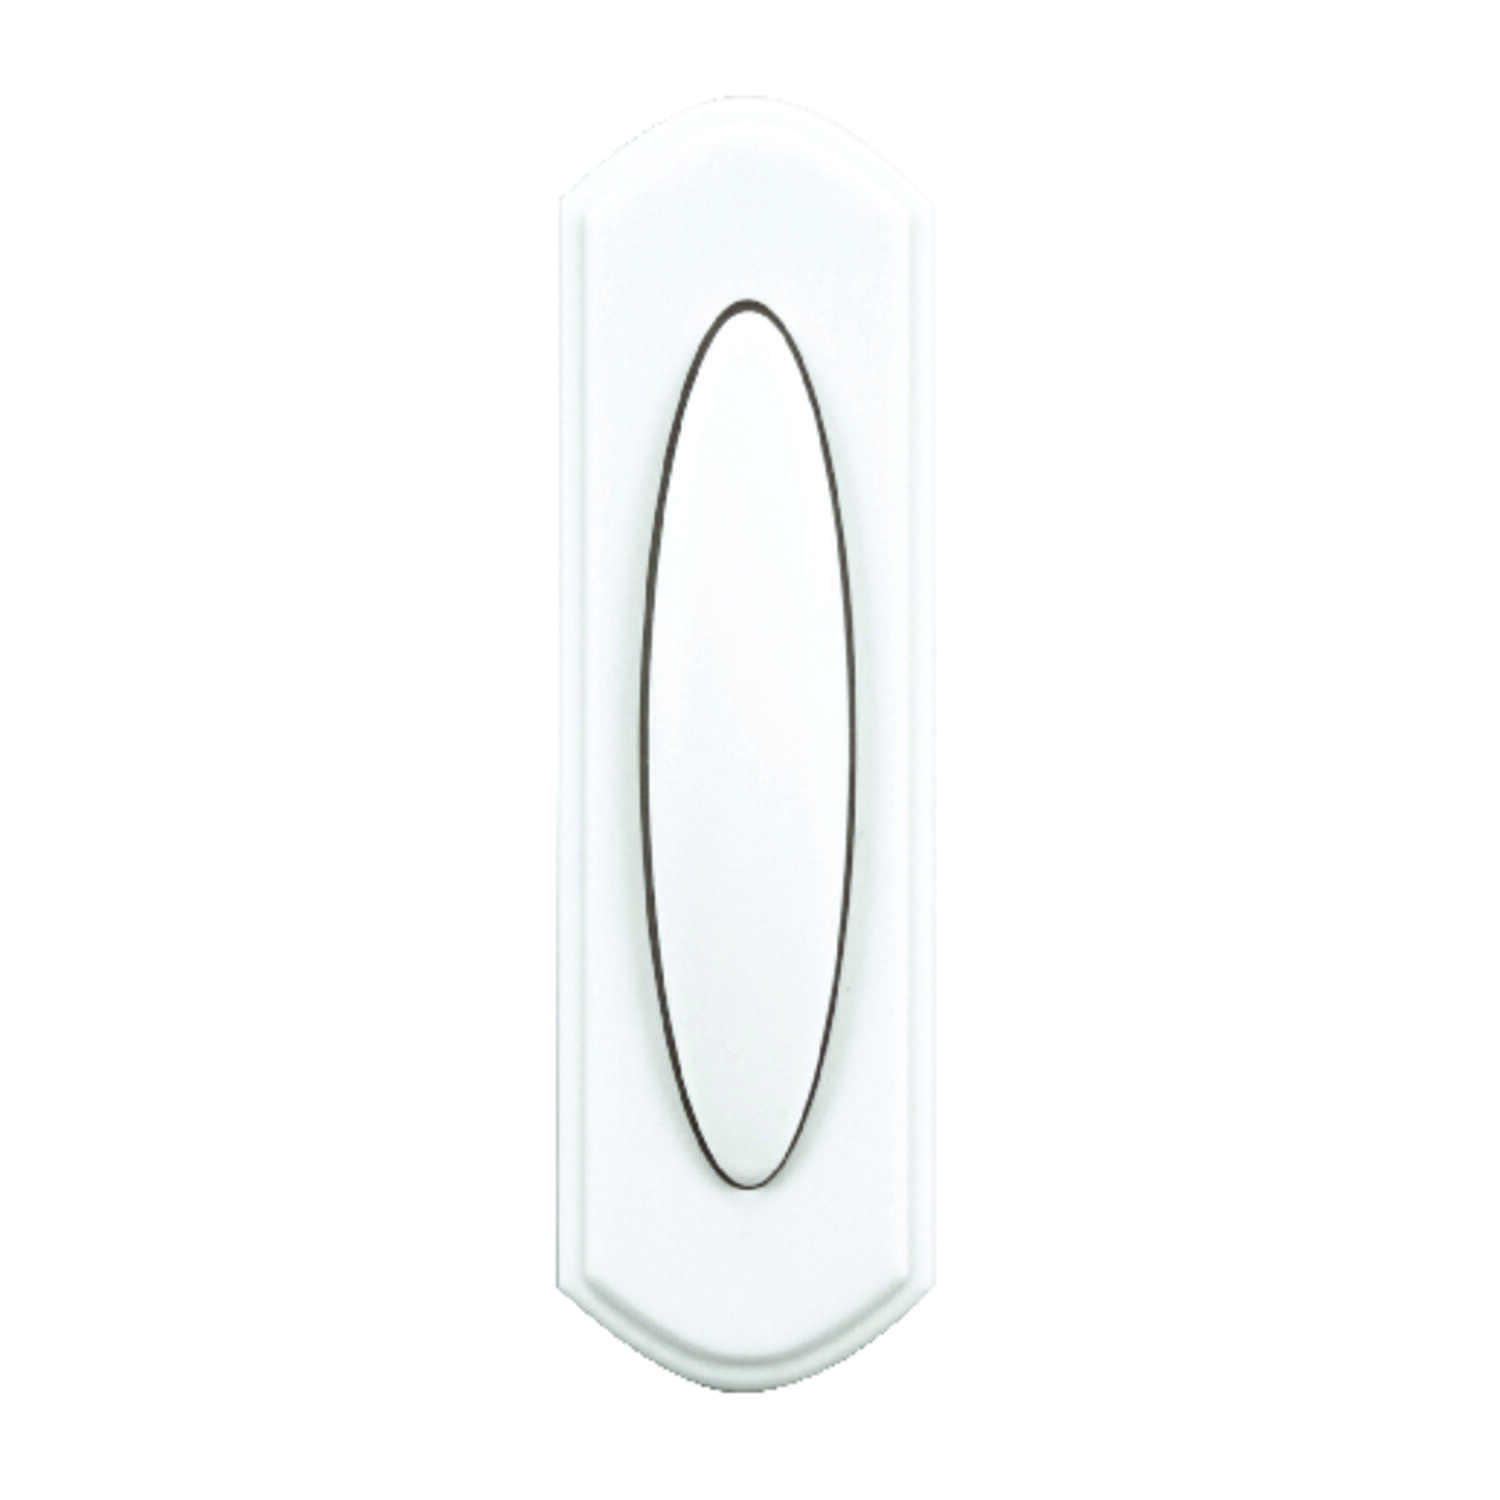 Heath Zenith Plastic Wireless Pushbutton Doorbell Ace